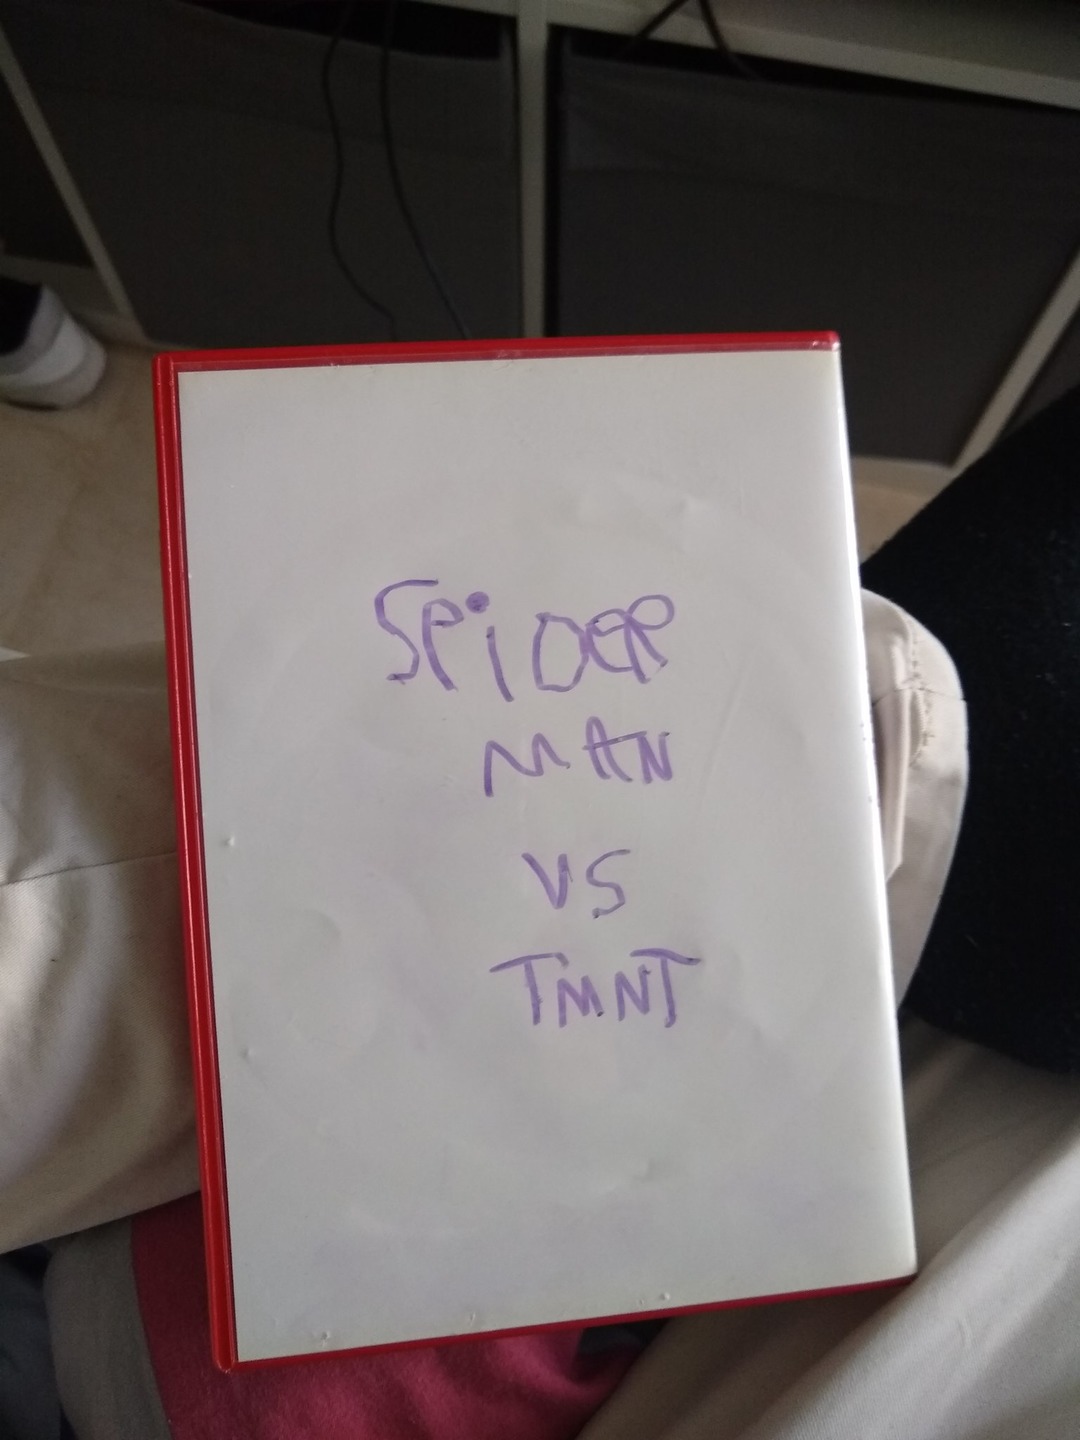 El DVD de Spiderman vs tmnt - meme